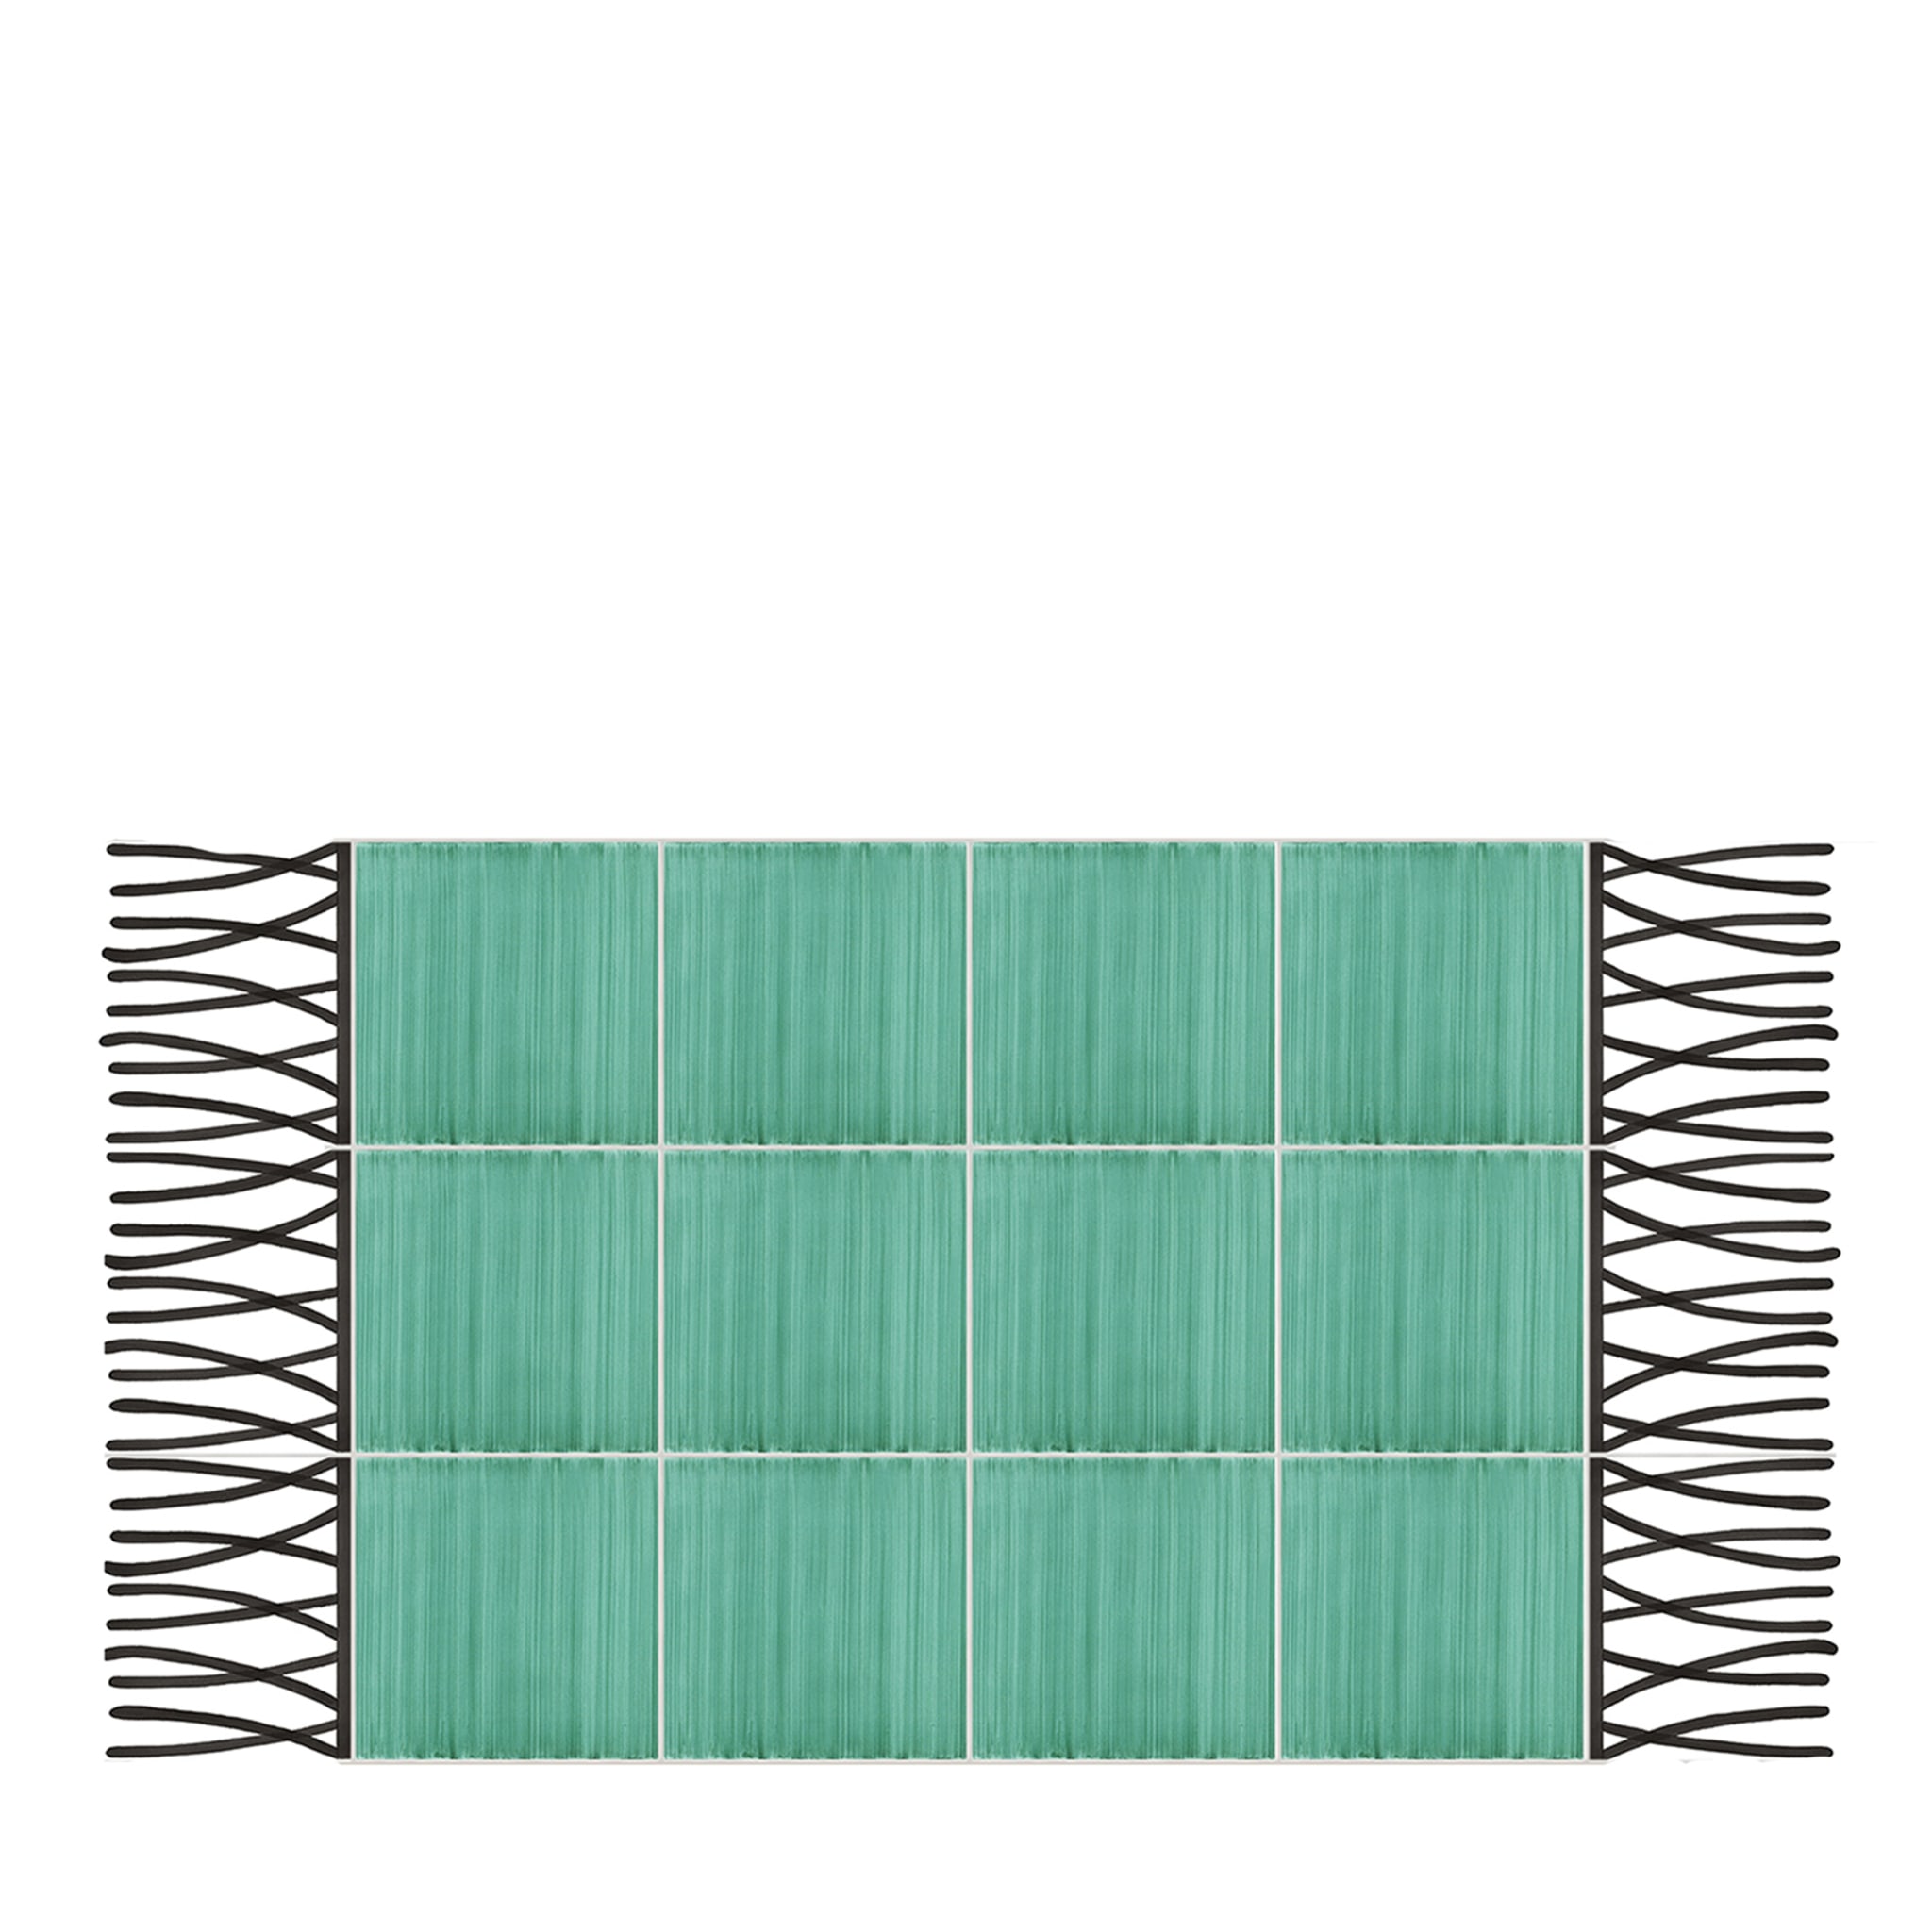 Teppich Total Grün Keramische Komposition von Giuliano Andrea dell'Uva 120 X 60 - Hauptansicht